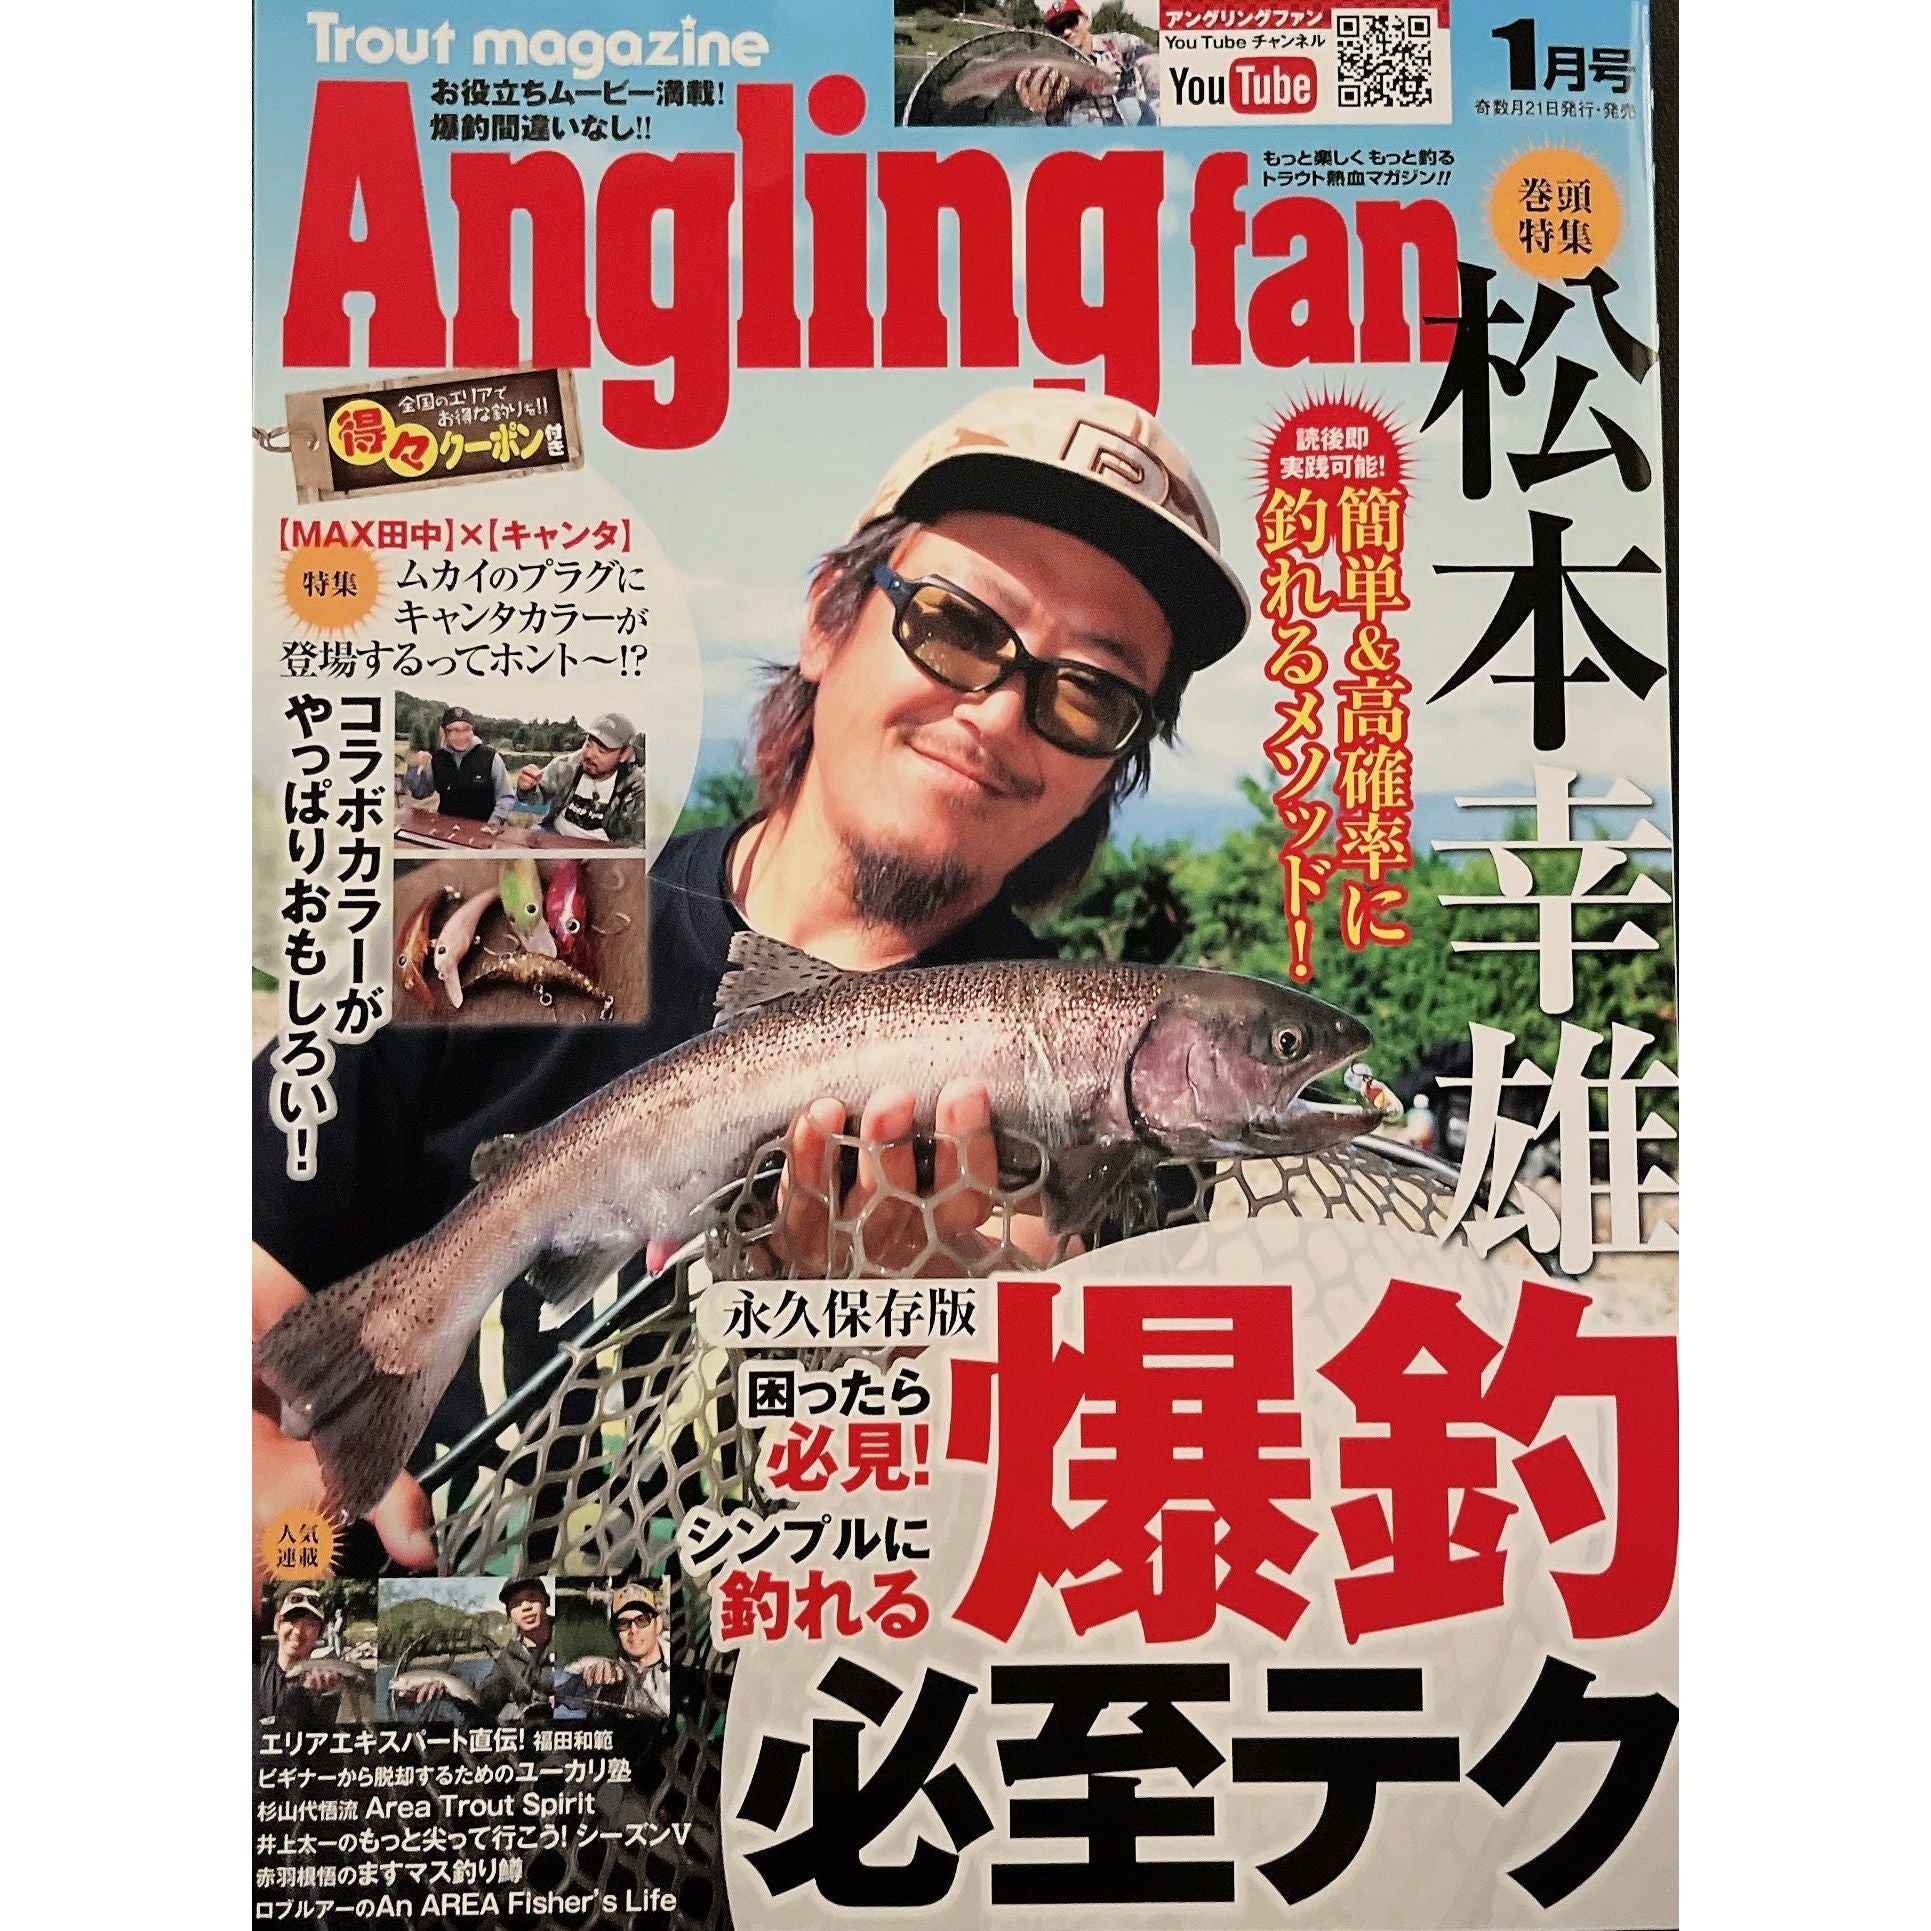 Angling Fan(アングリングファン) 2018年 01 月号 雑誌 - フィギュア